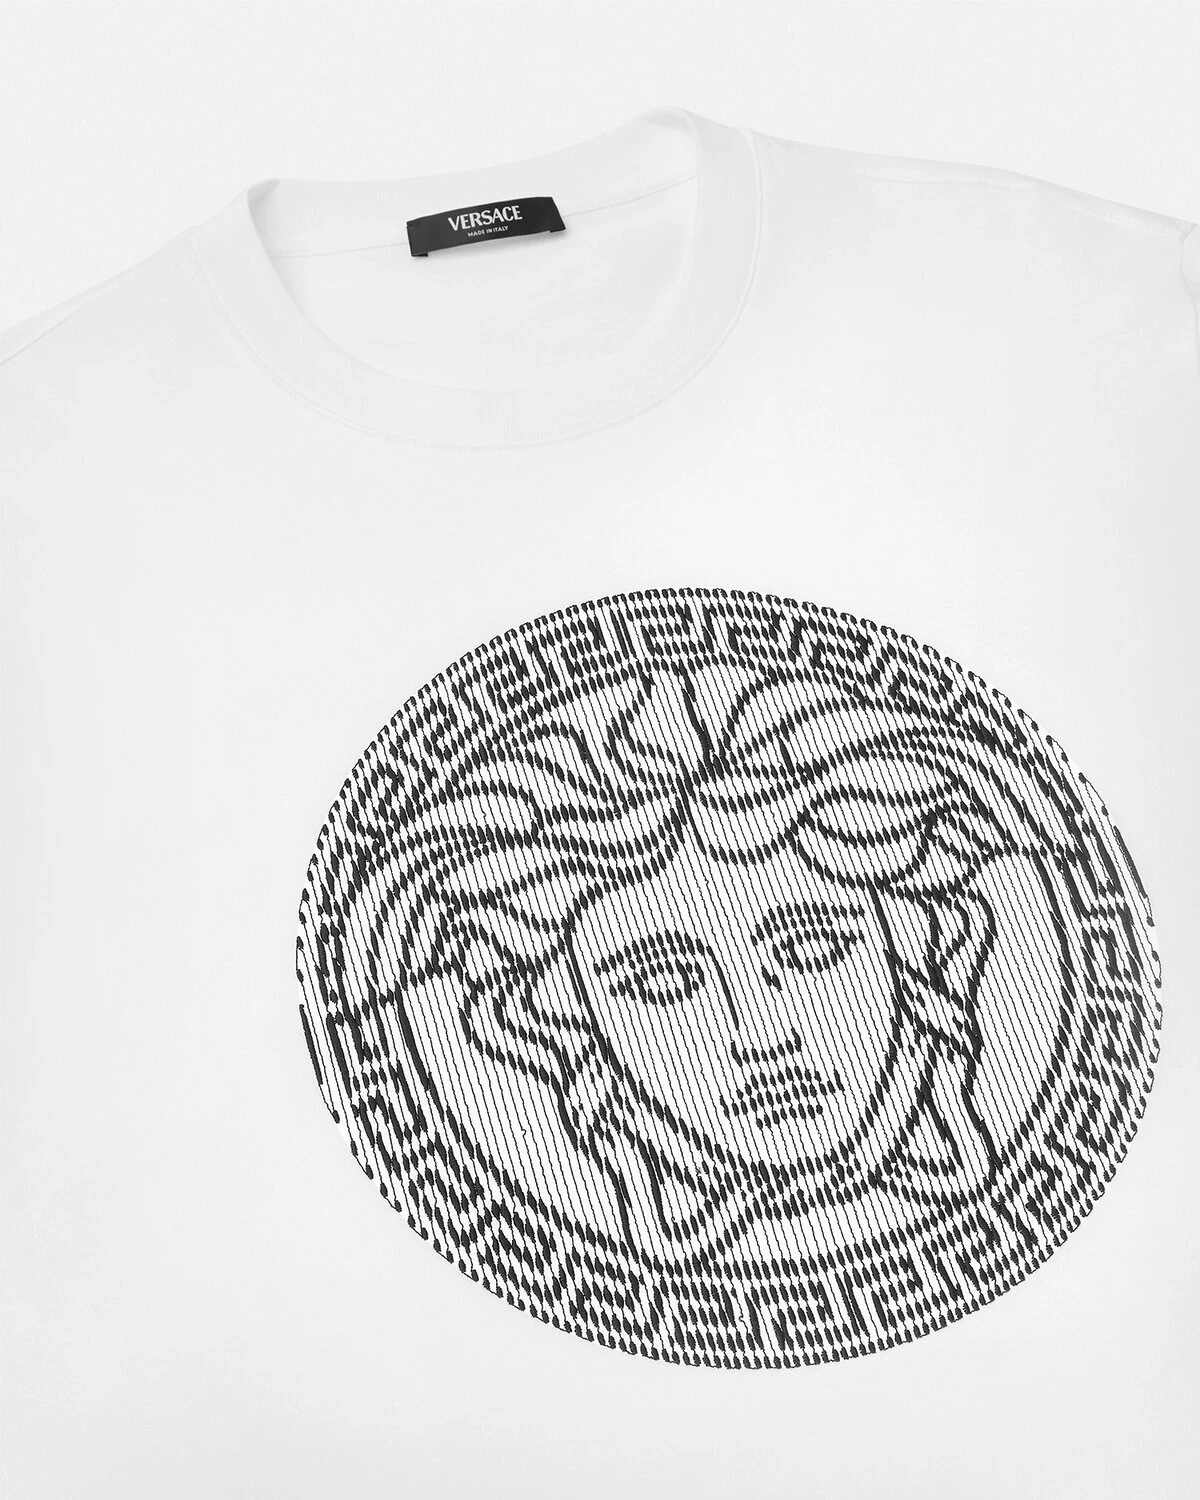 Embroidered Medusa Sliced T-Shirt - 2